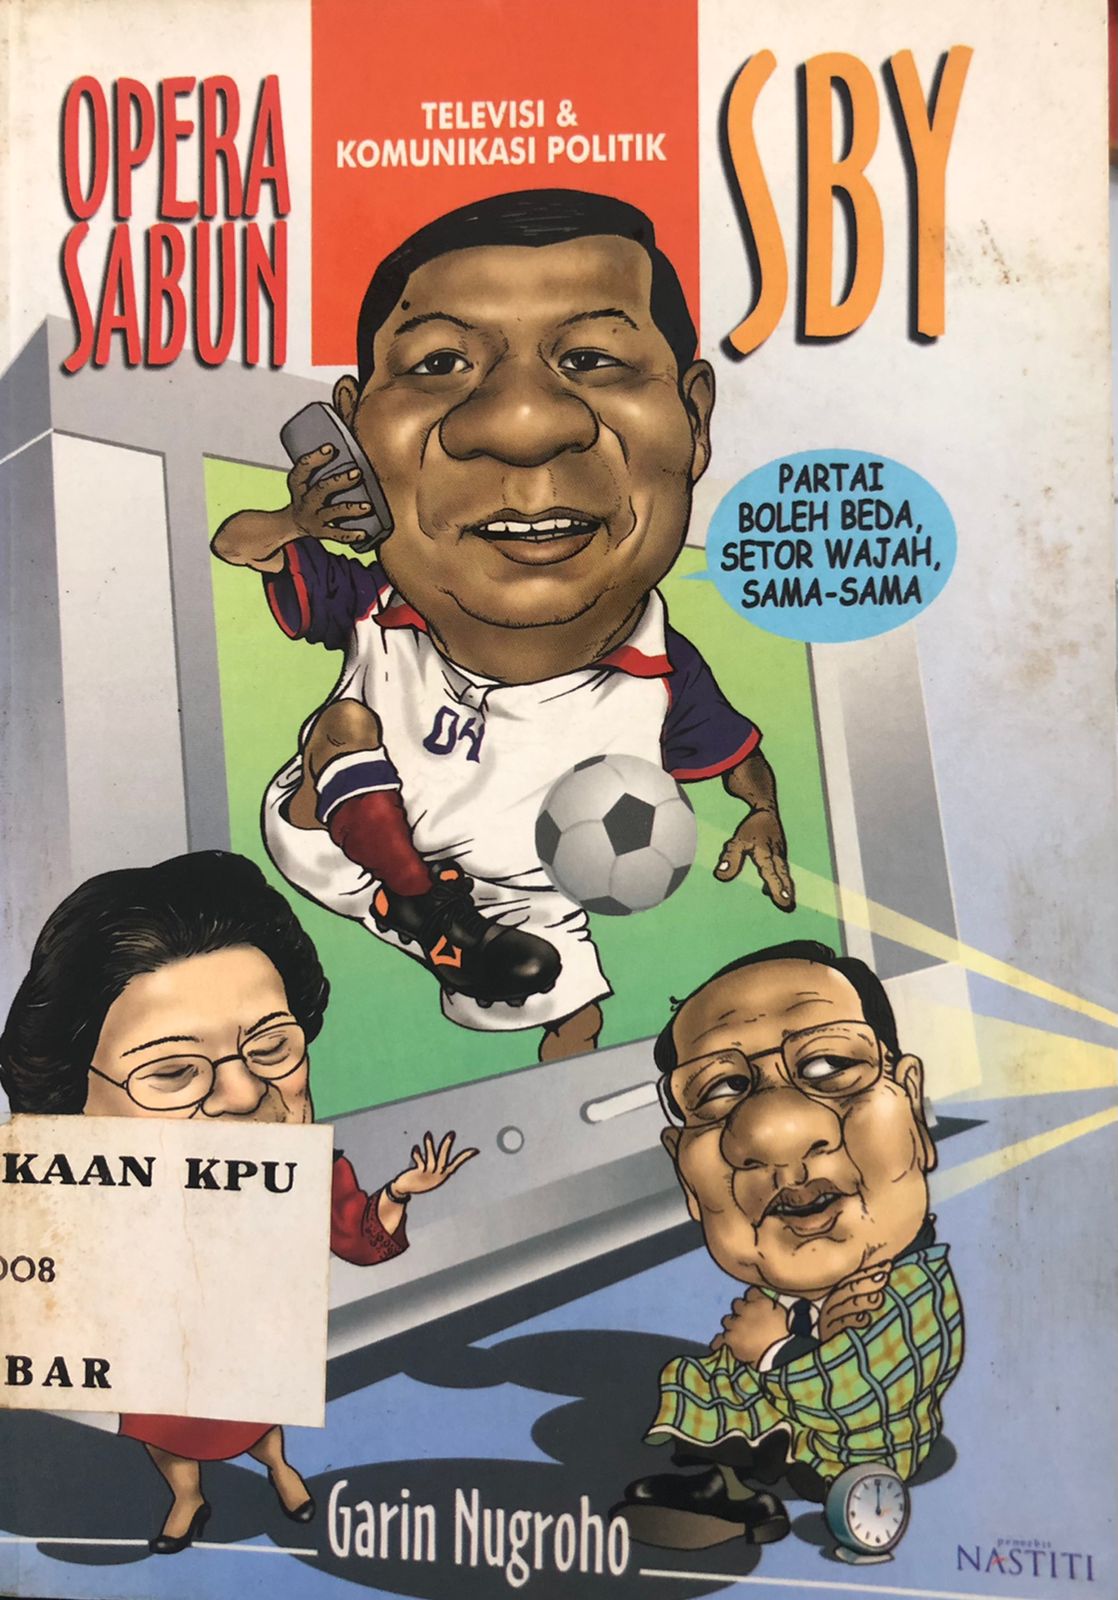 Opera Sabun SBY: Televisi dan Komunikasi Politik